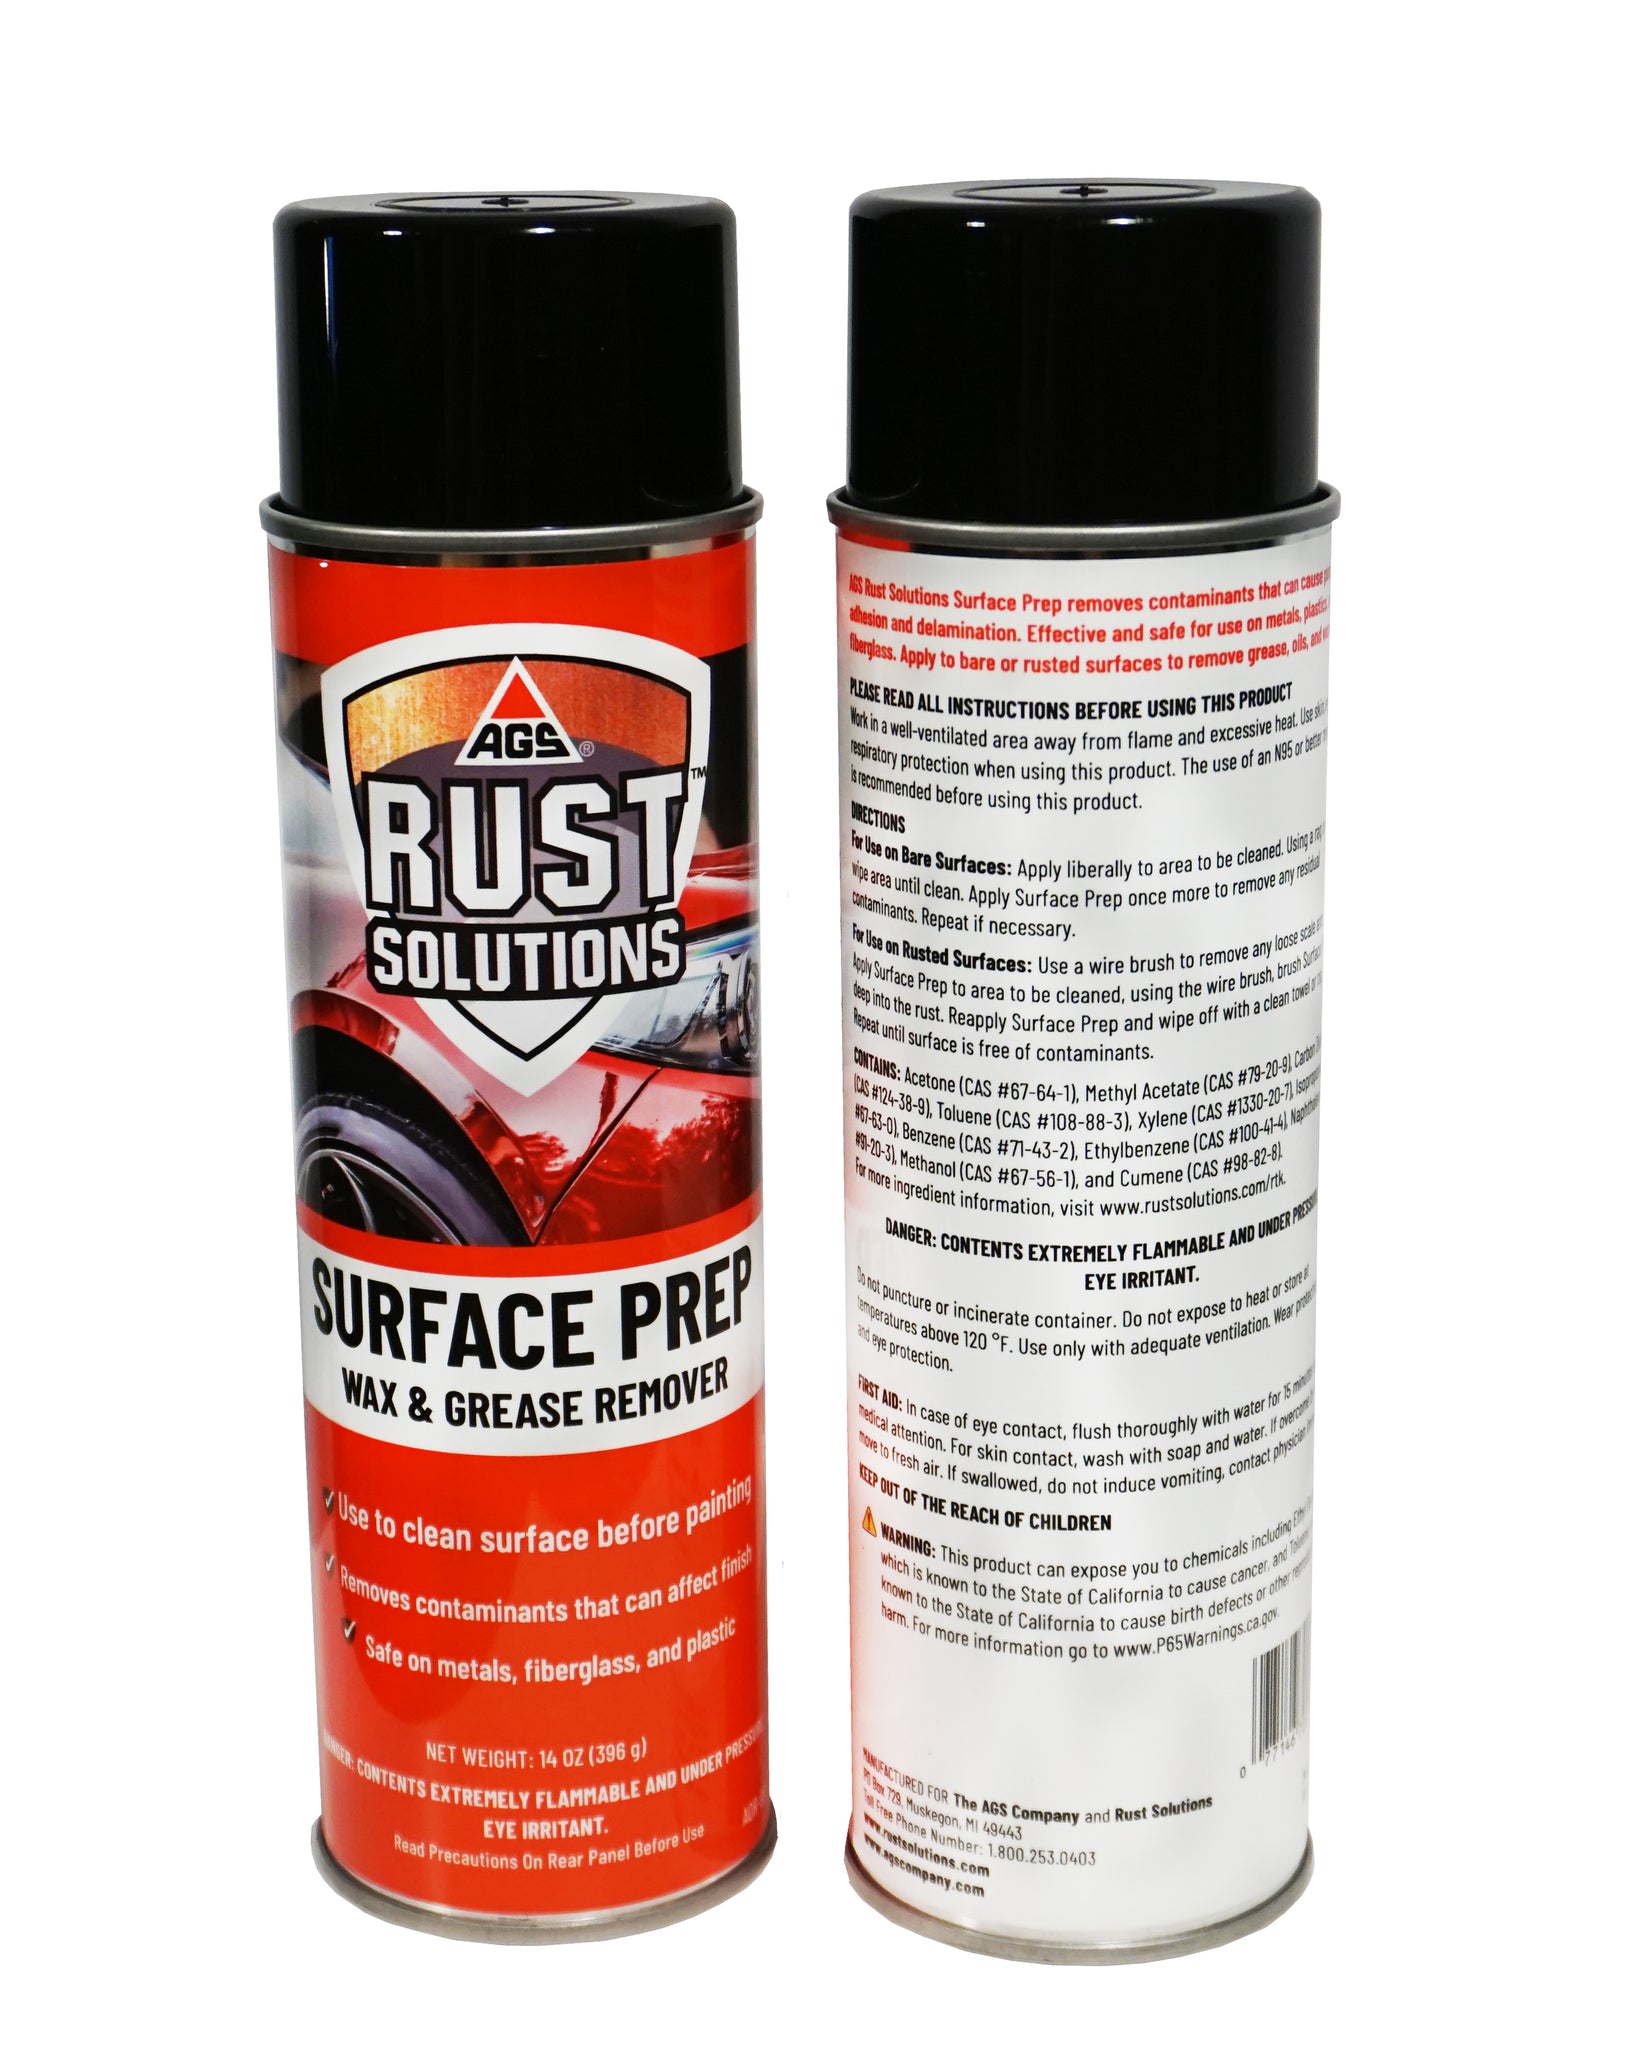 RustBlast - Metal Prep Primer - Metal Etch - Rust Remover